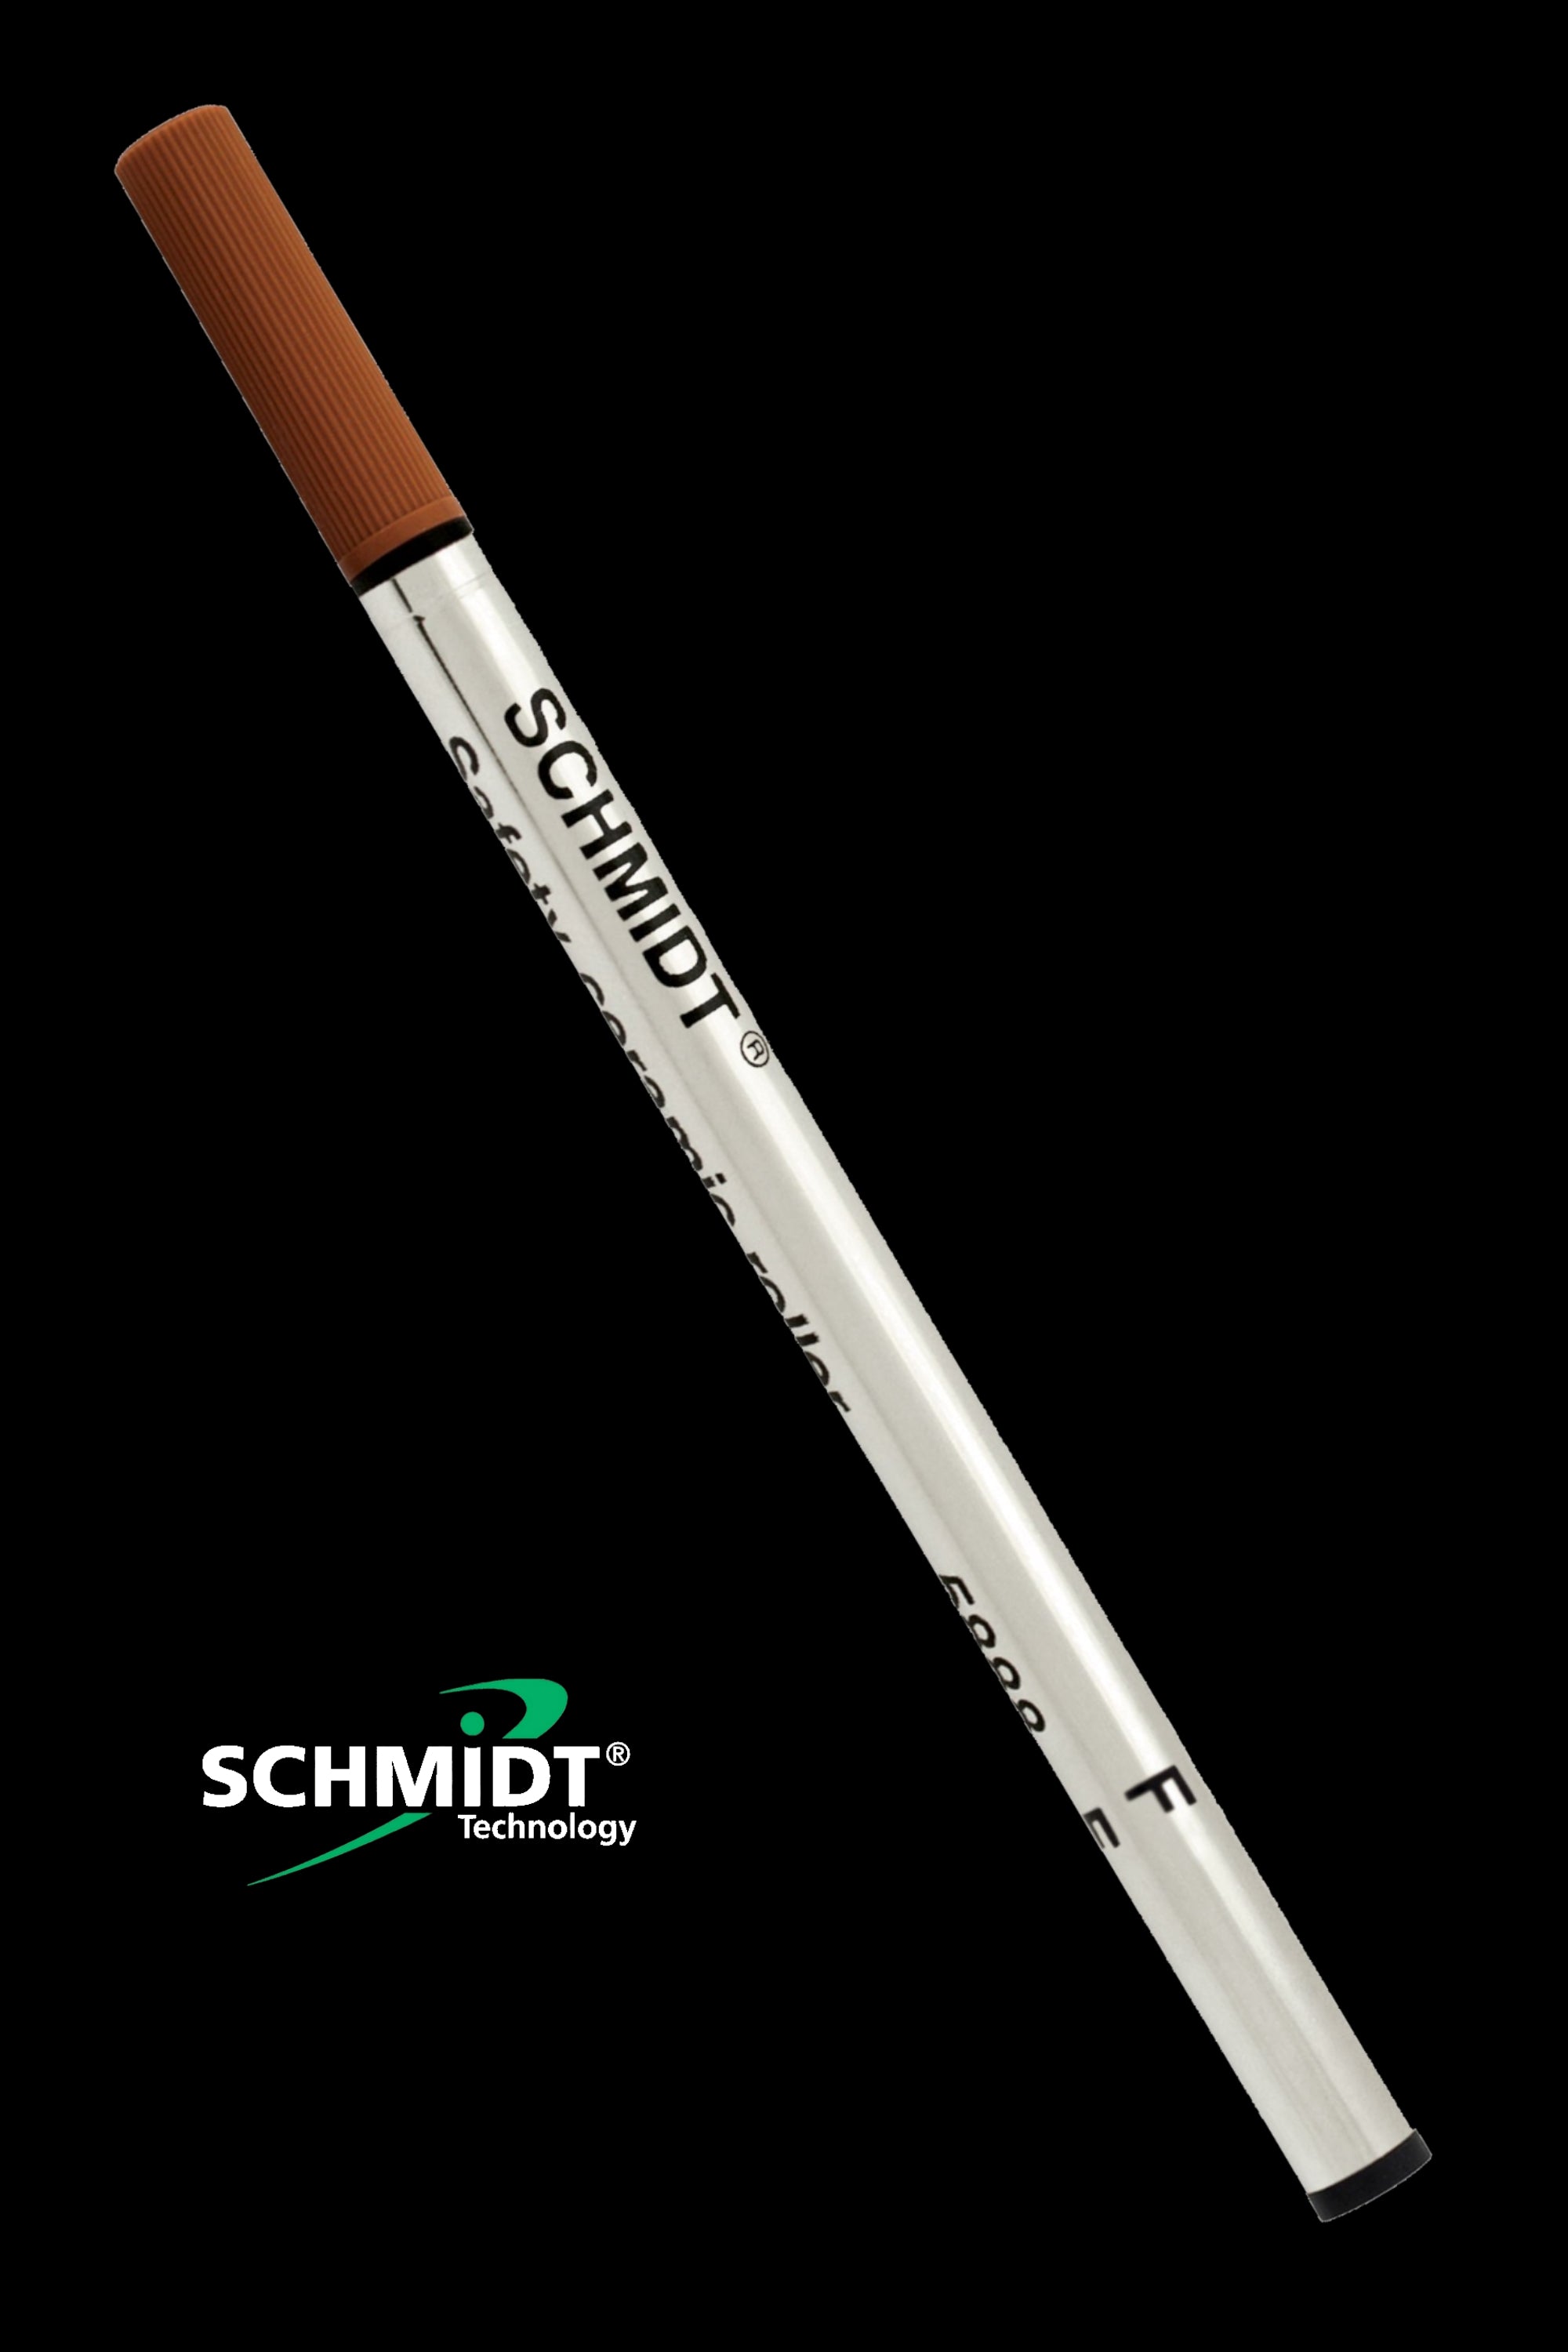 Schmidt 5888 Rollerball Pen Refill Cartridge